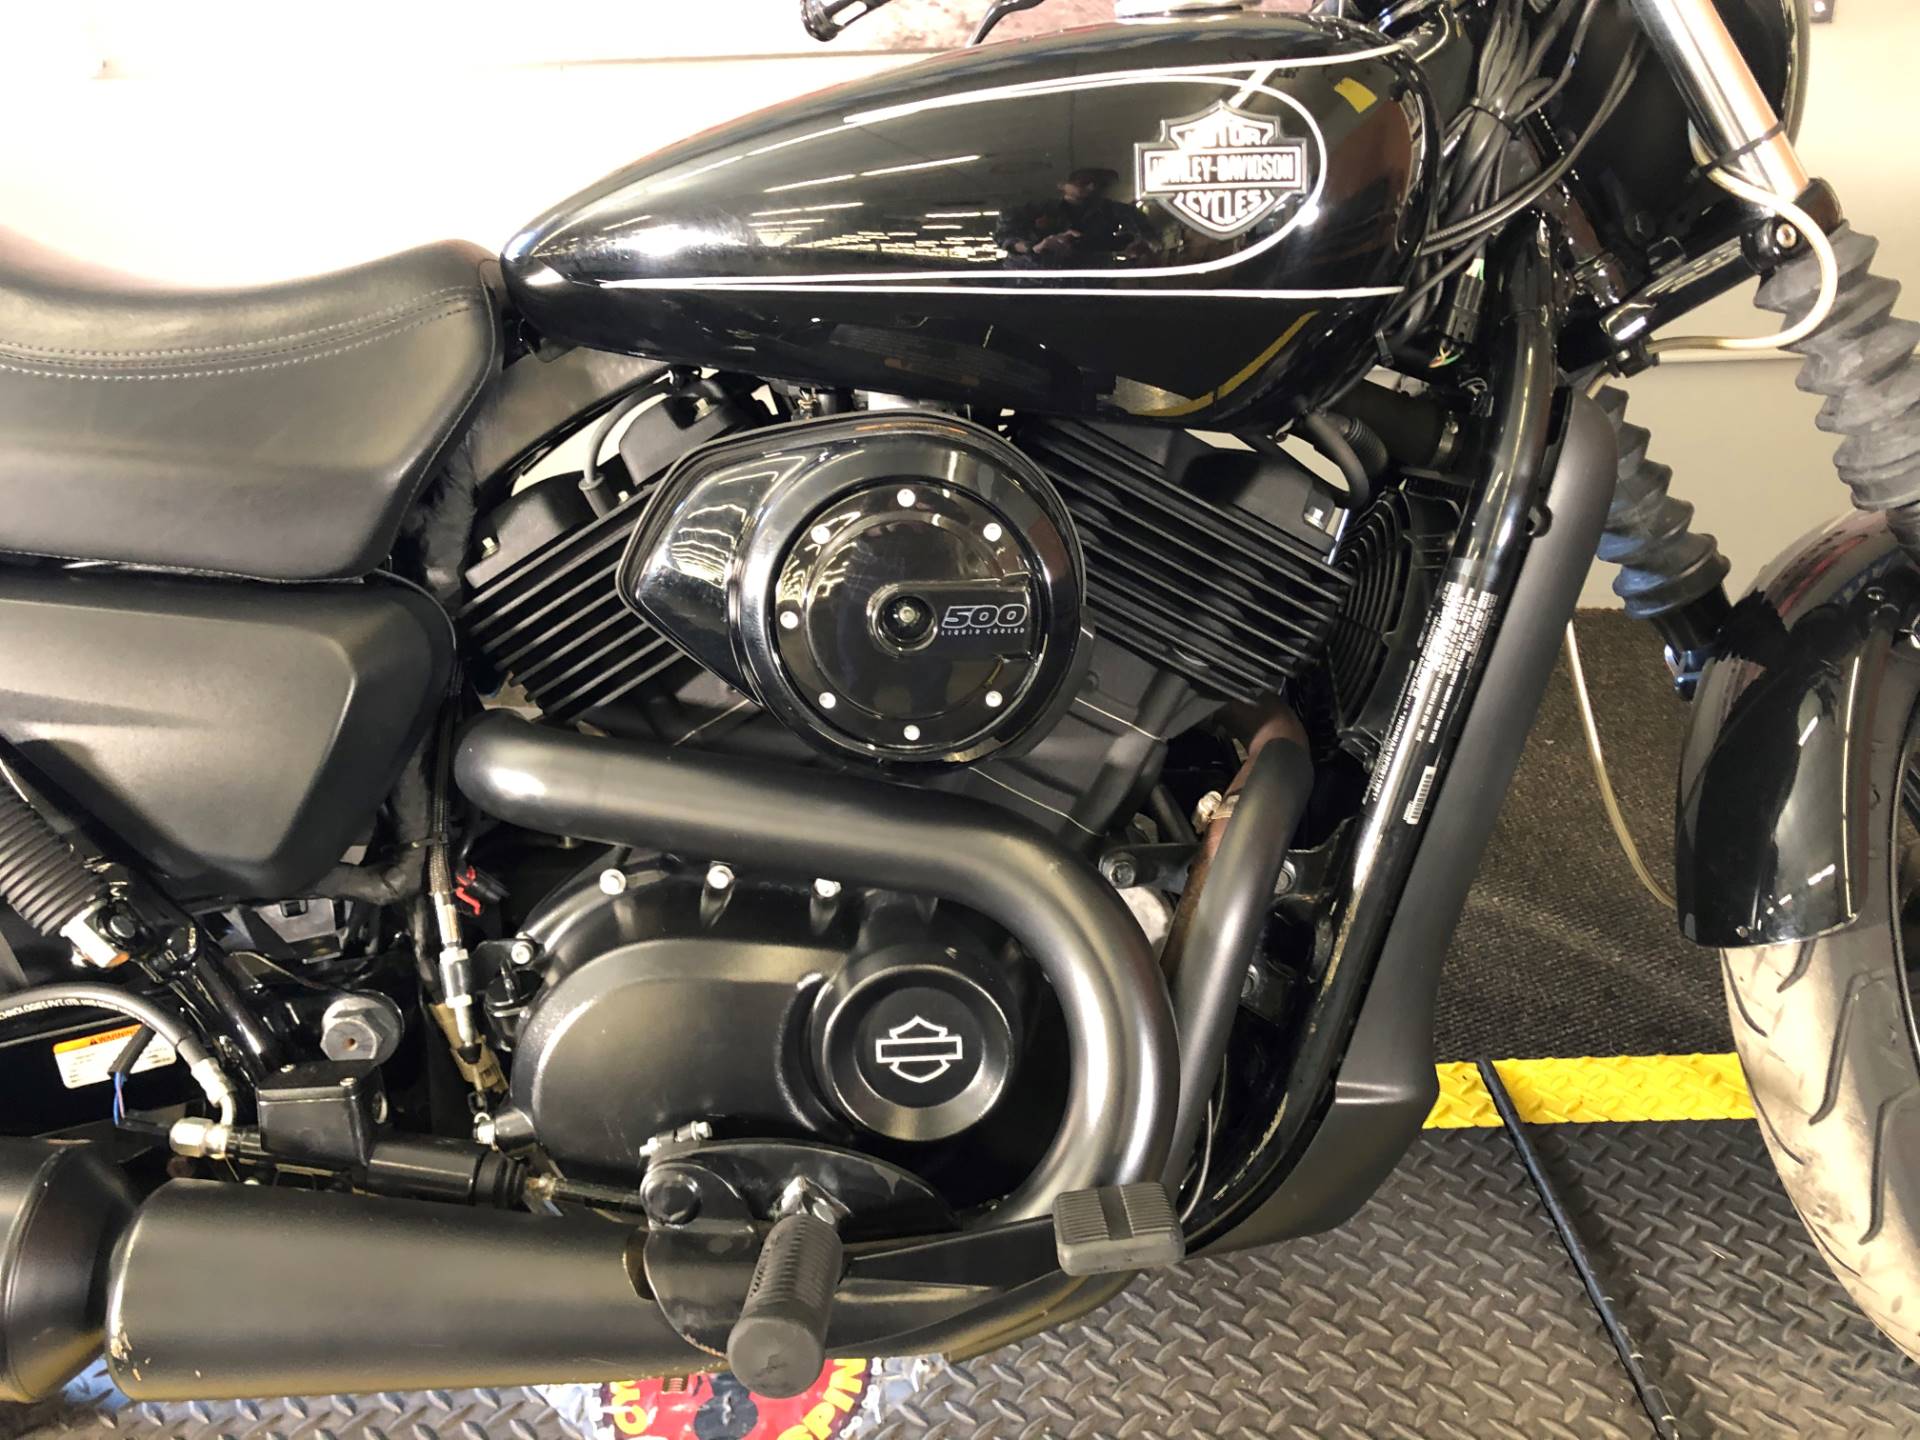 Used 2015 Harley Davidson Street 500 Motorcycles In Tyrone Pa 511921 Vivid Black